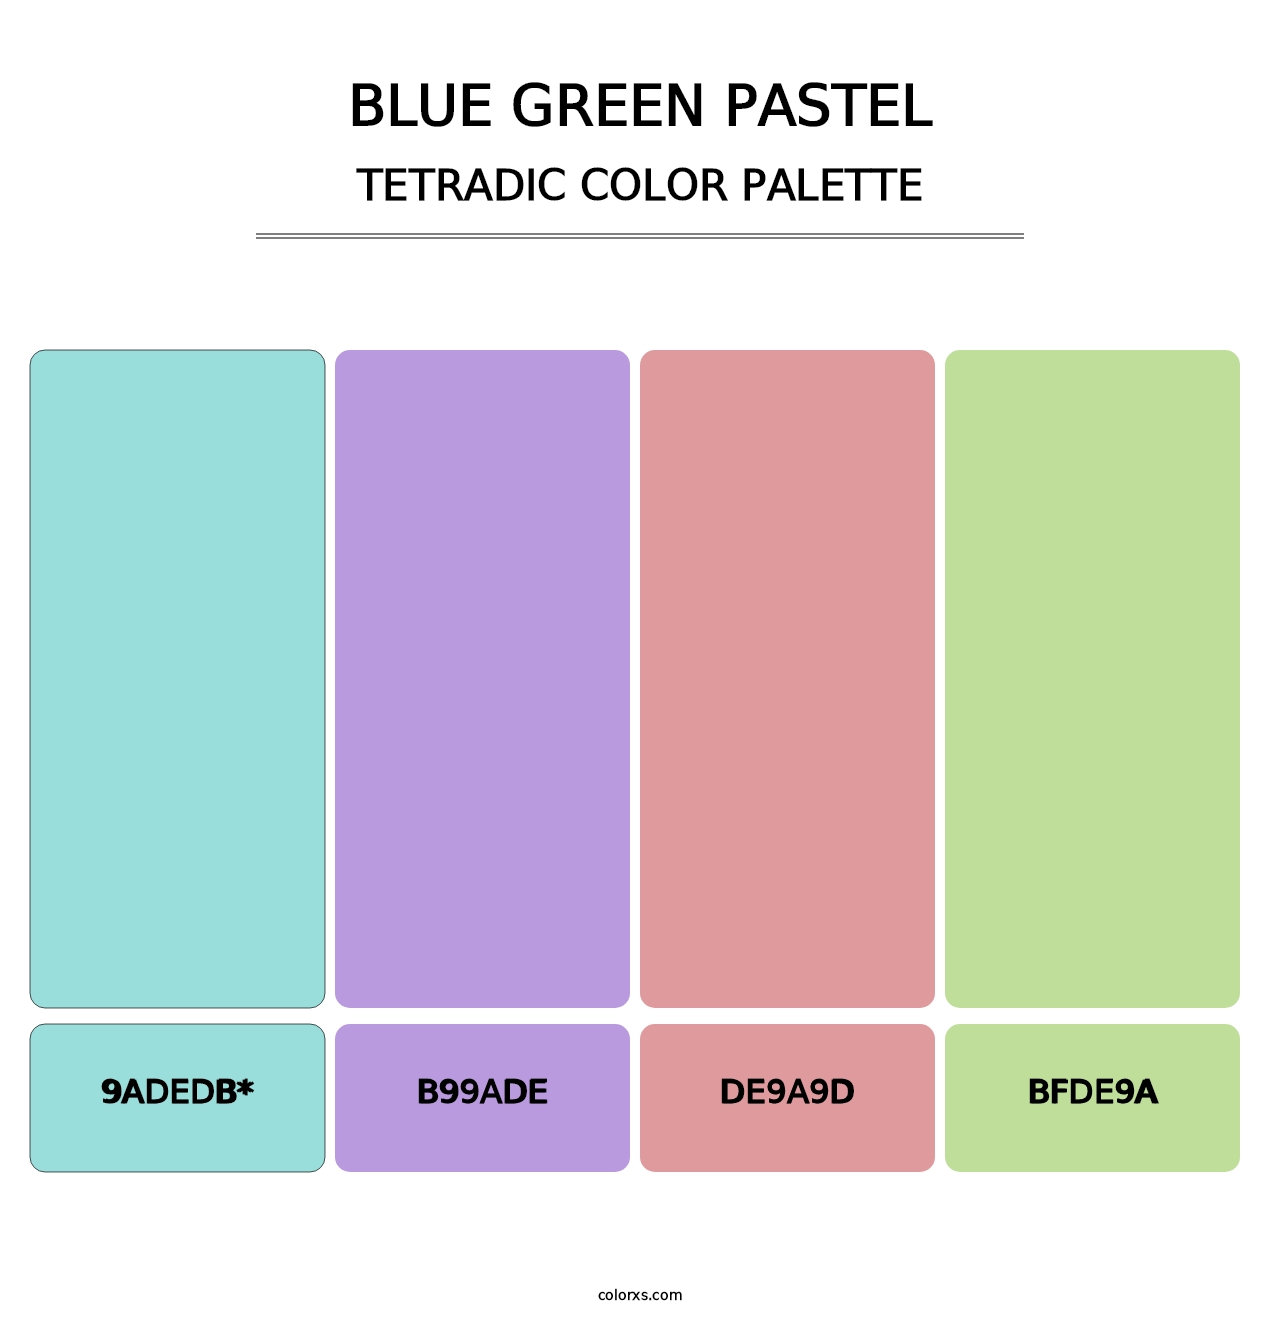 Blue Green Pastel - Tetradic Color Palette